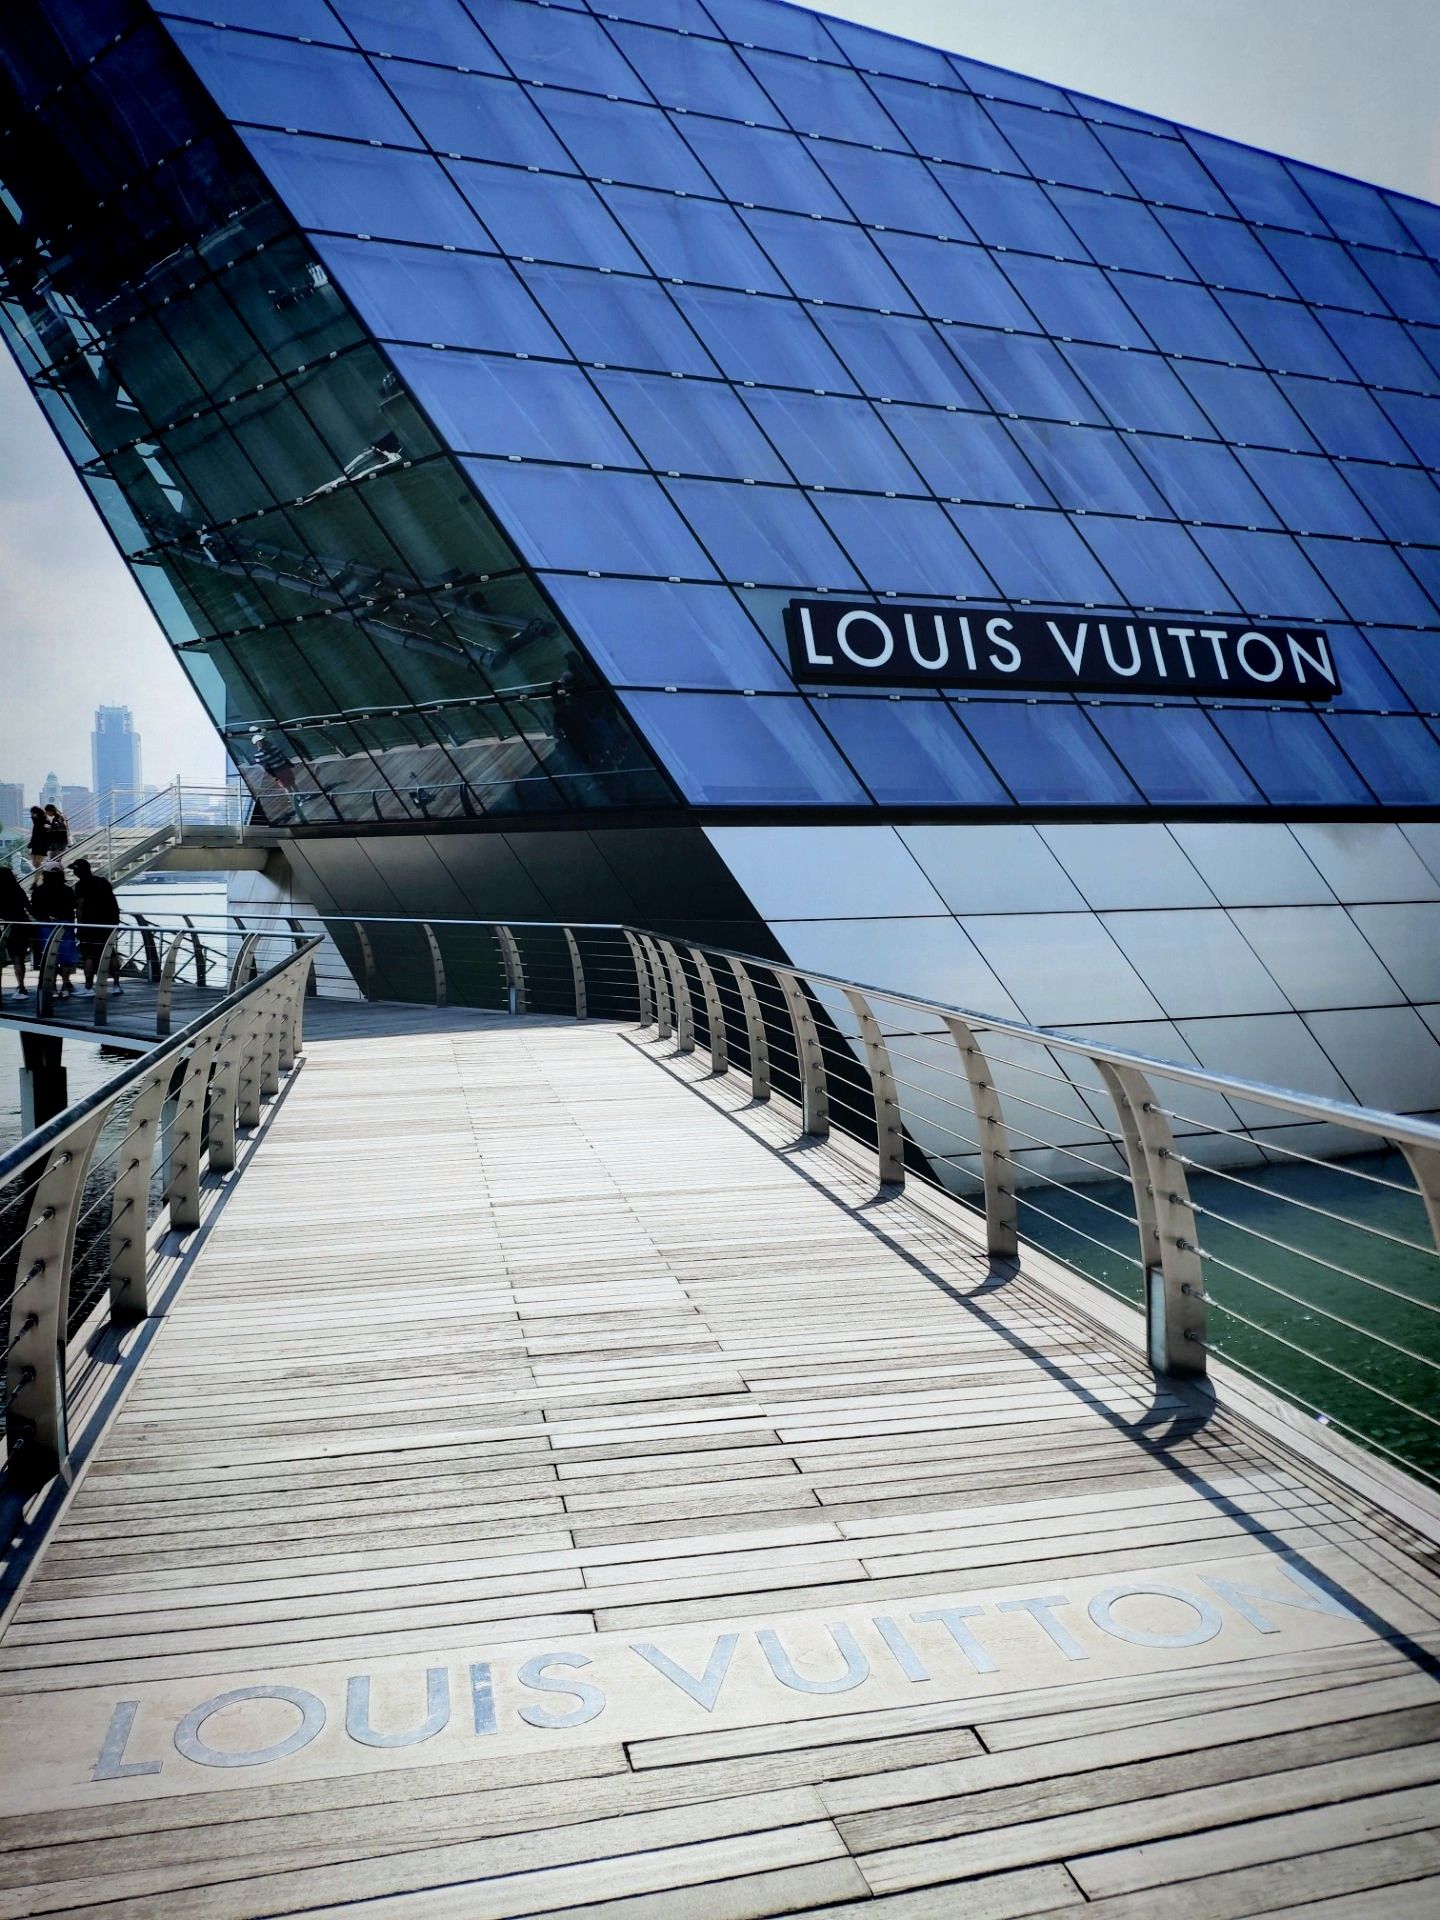 Louis Vuitton Island Store - Singapore Travel Reviews｜